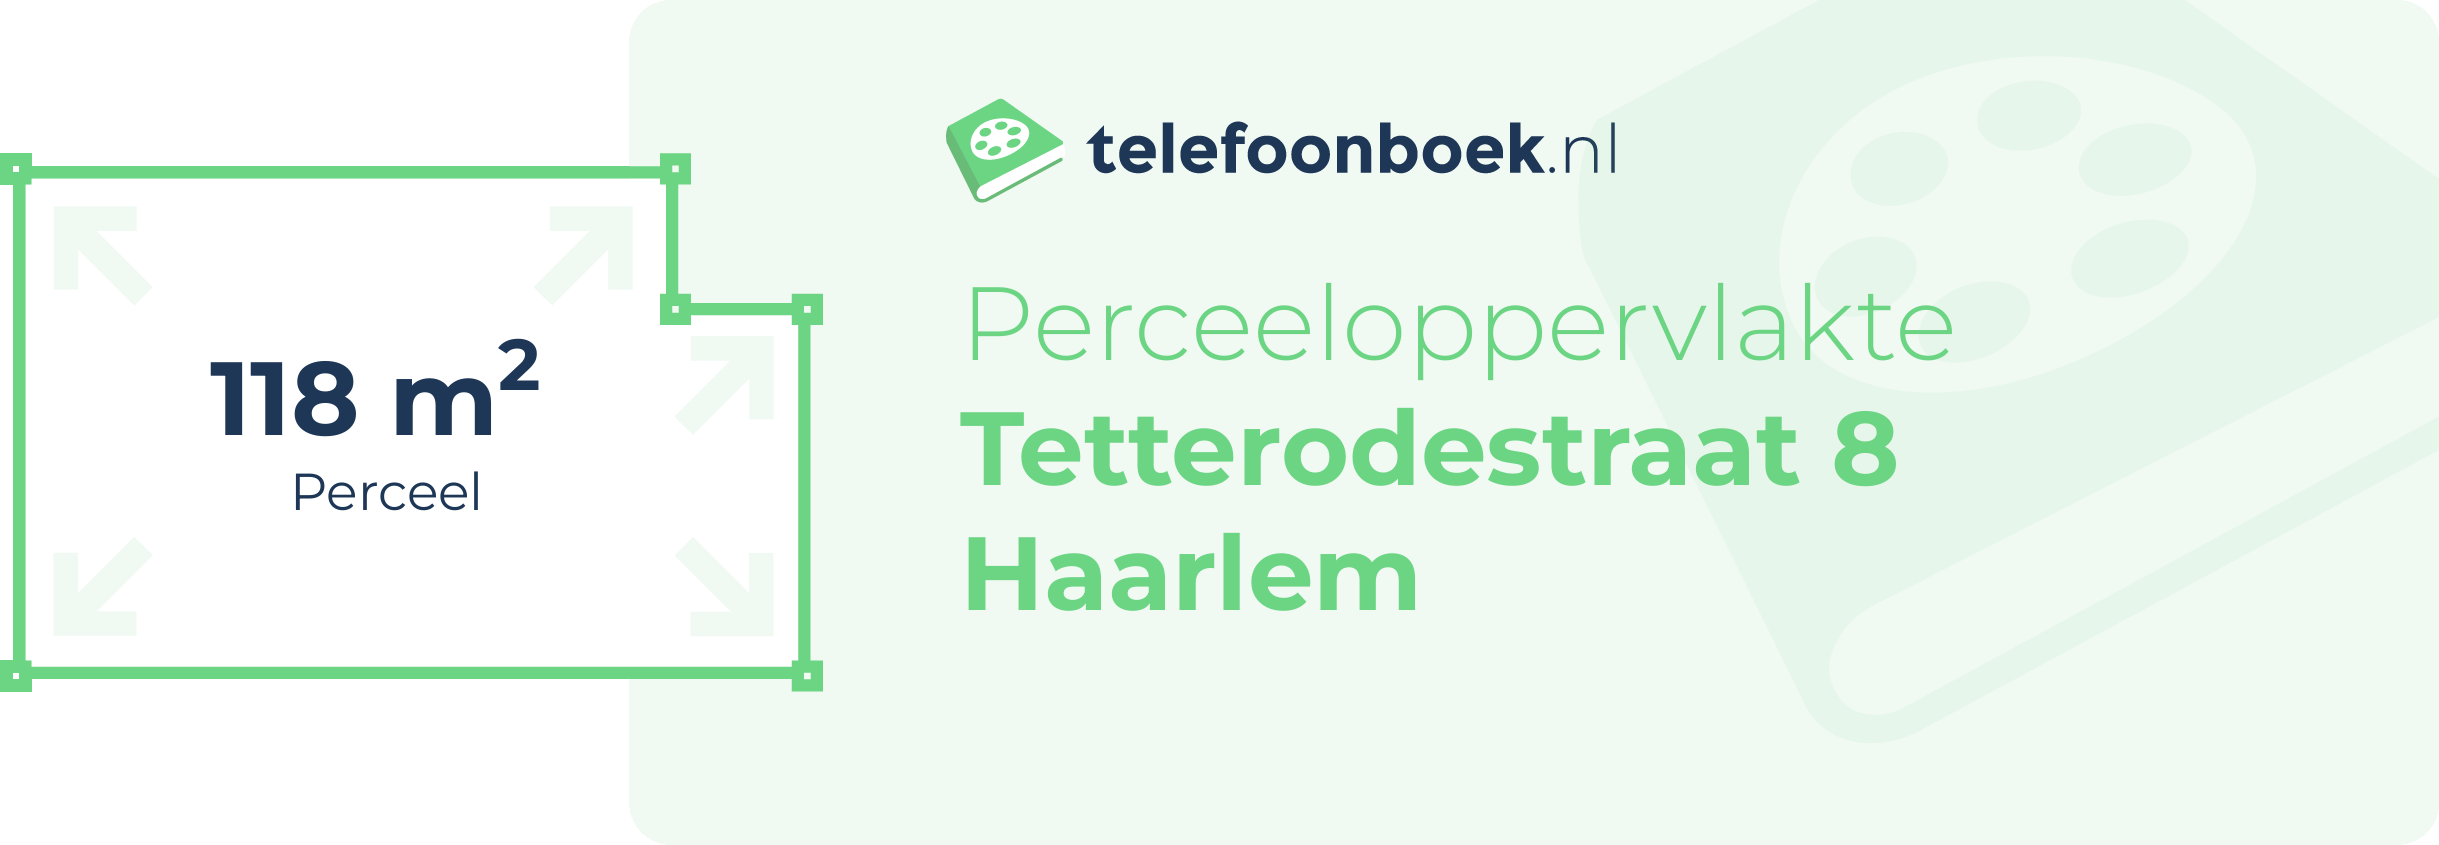 Perceeloppervlakte Tetterodestraat 8 Haarlem